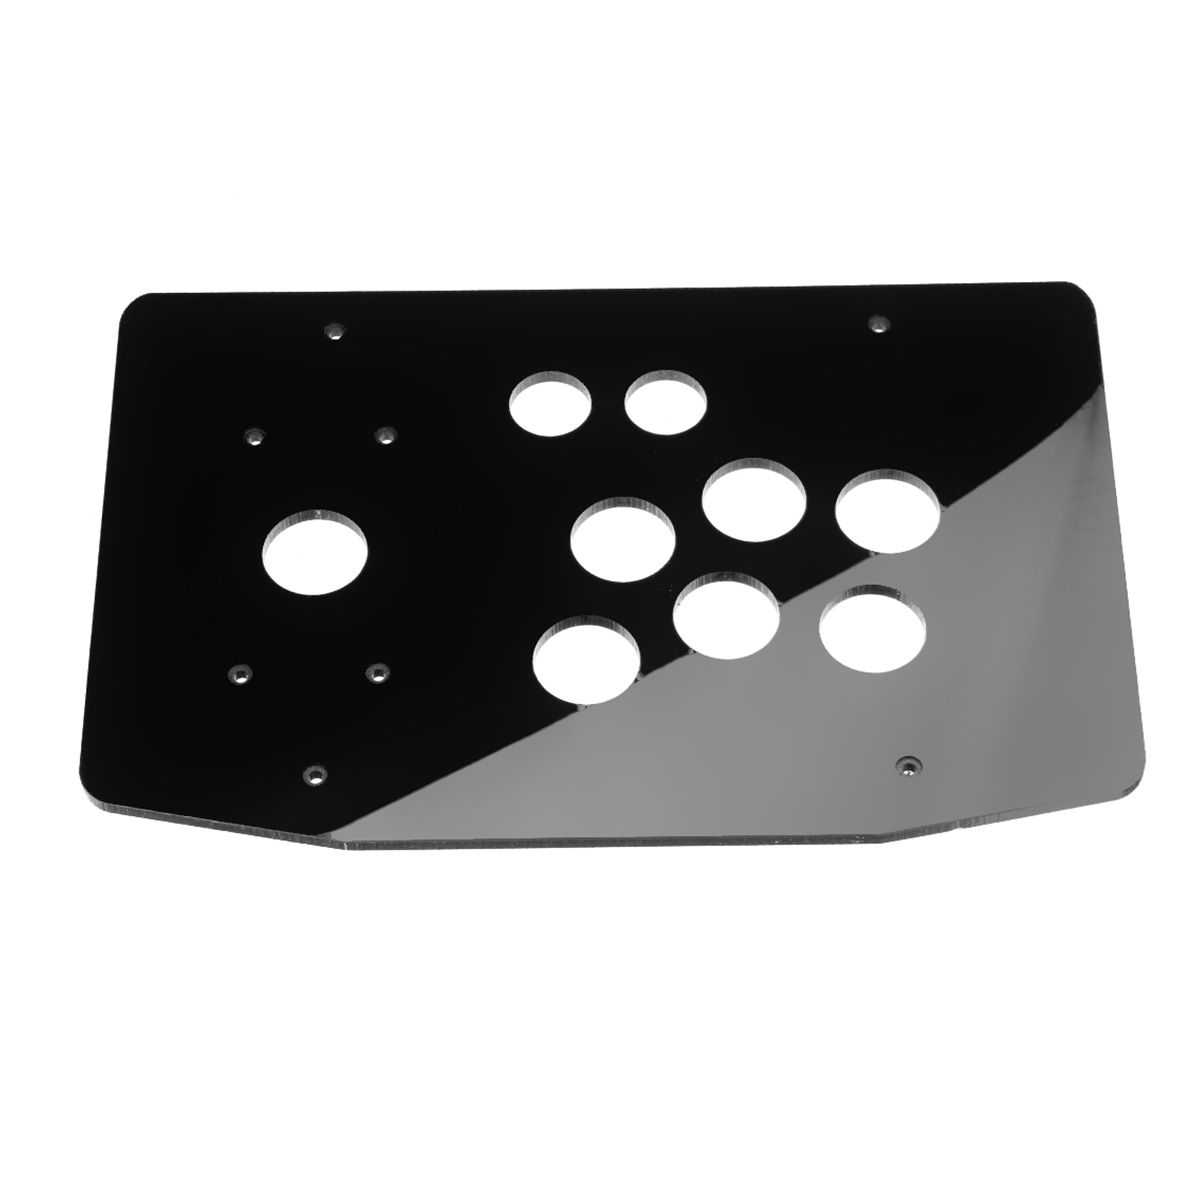 DIY Clear Black Acrylic Panel Case Sturdy Construction for Arcade Joystick Game Controller 15